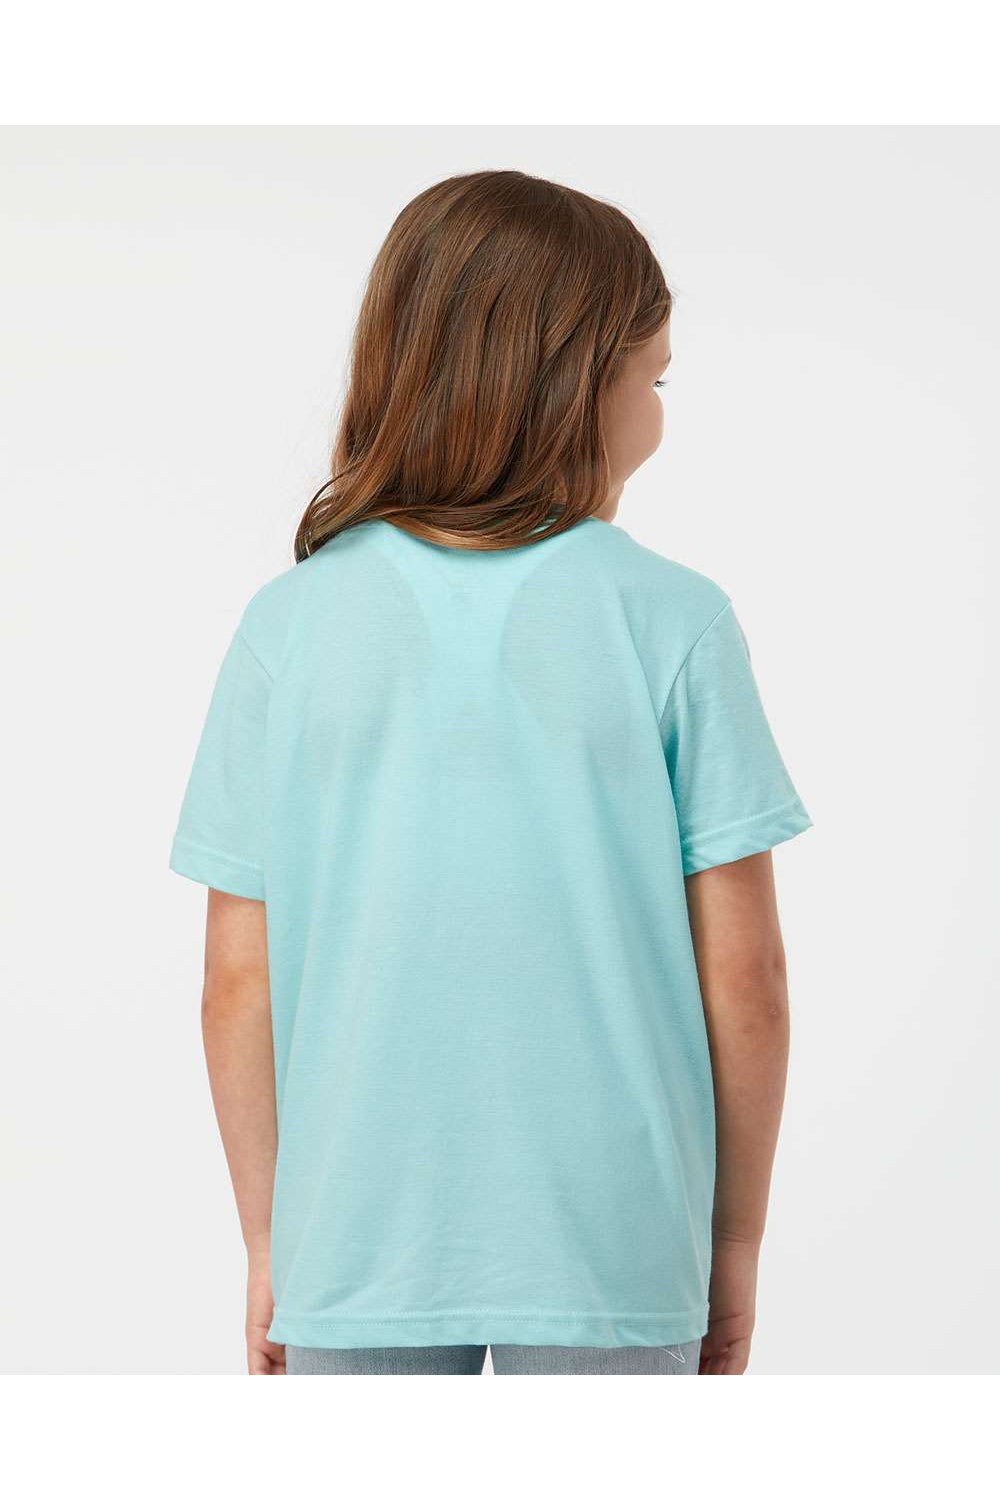 Tultex 235 Youth Fine Jersey Short Sleeve Crewneck T-Shirt Heather Purist Blue Model Back